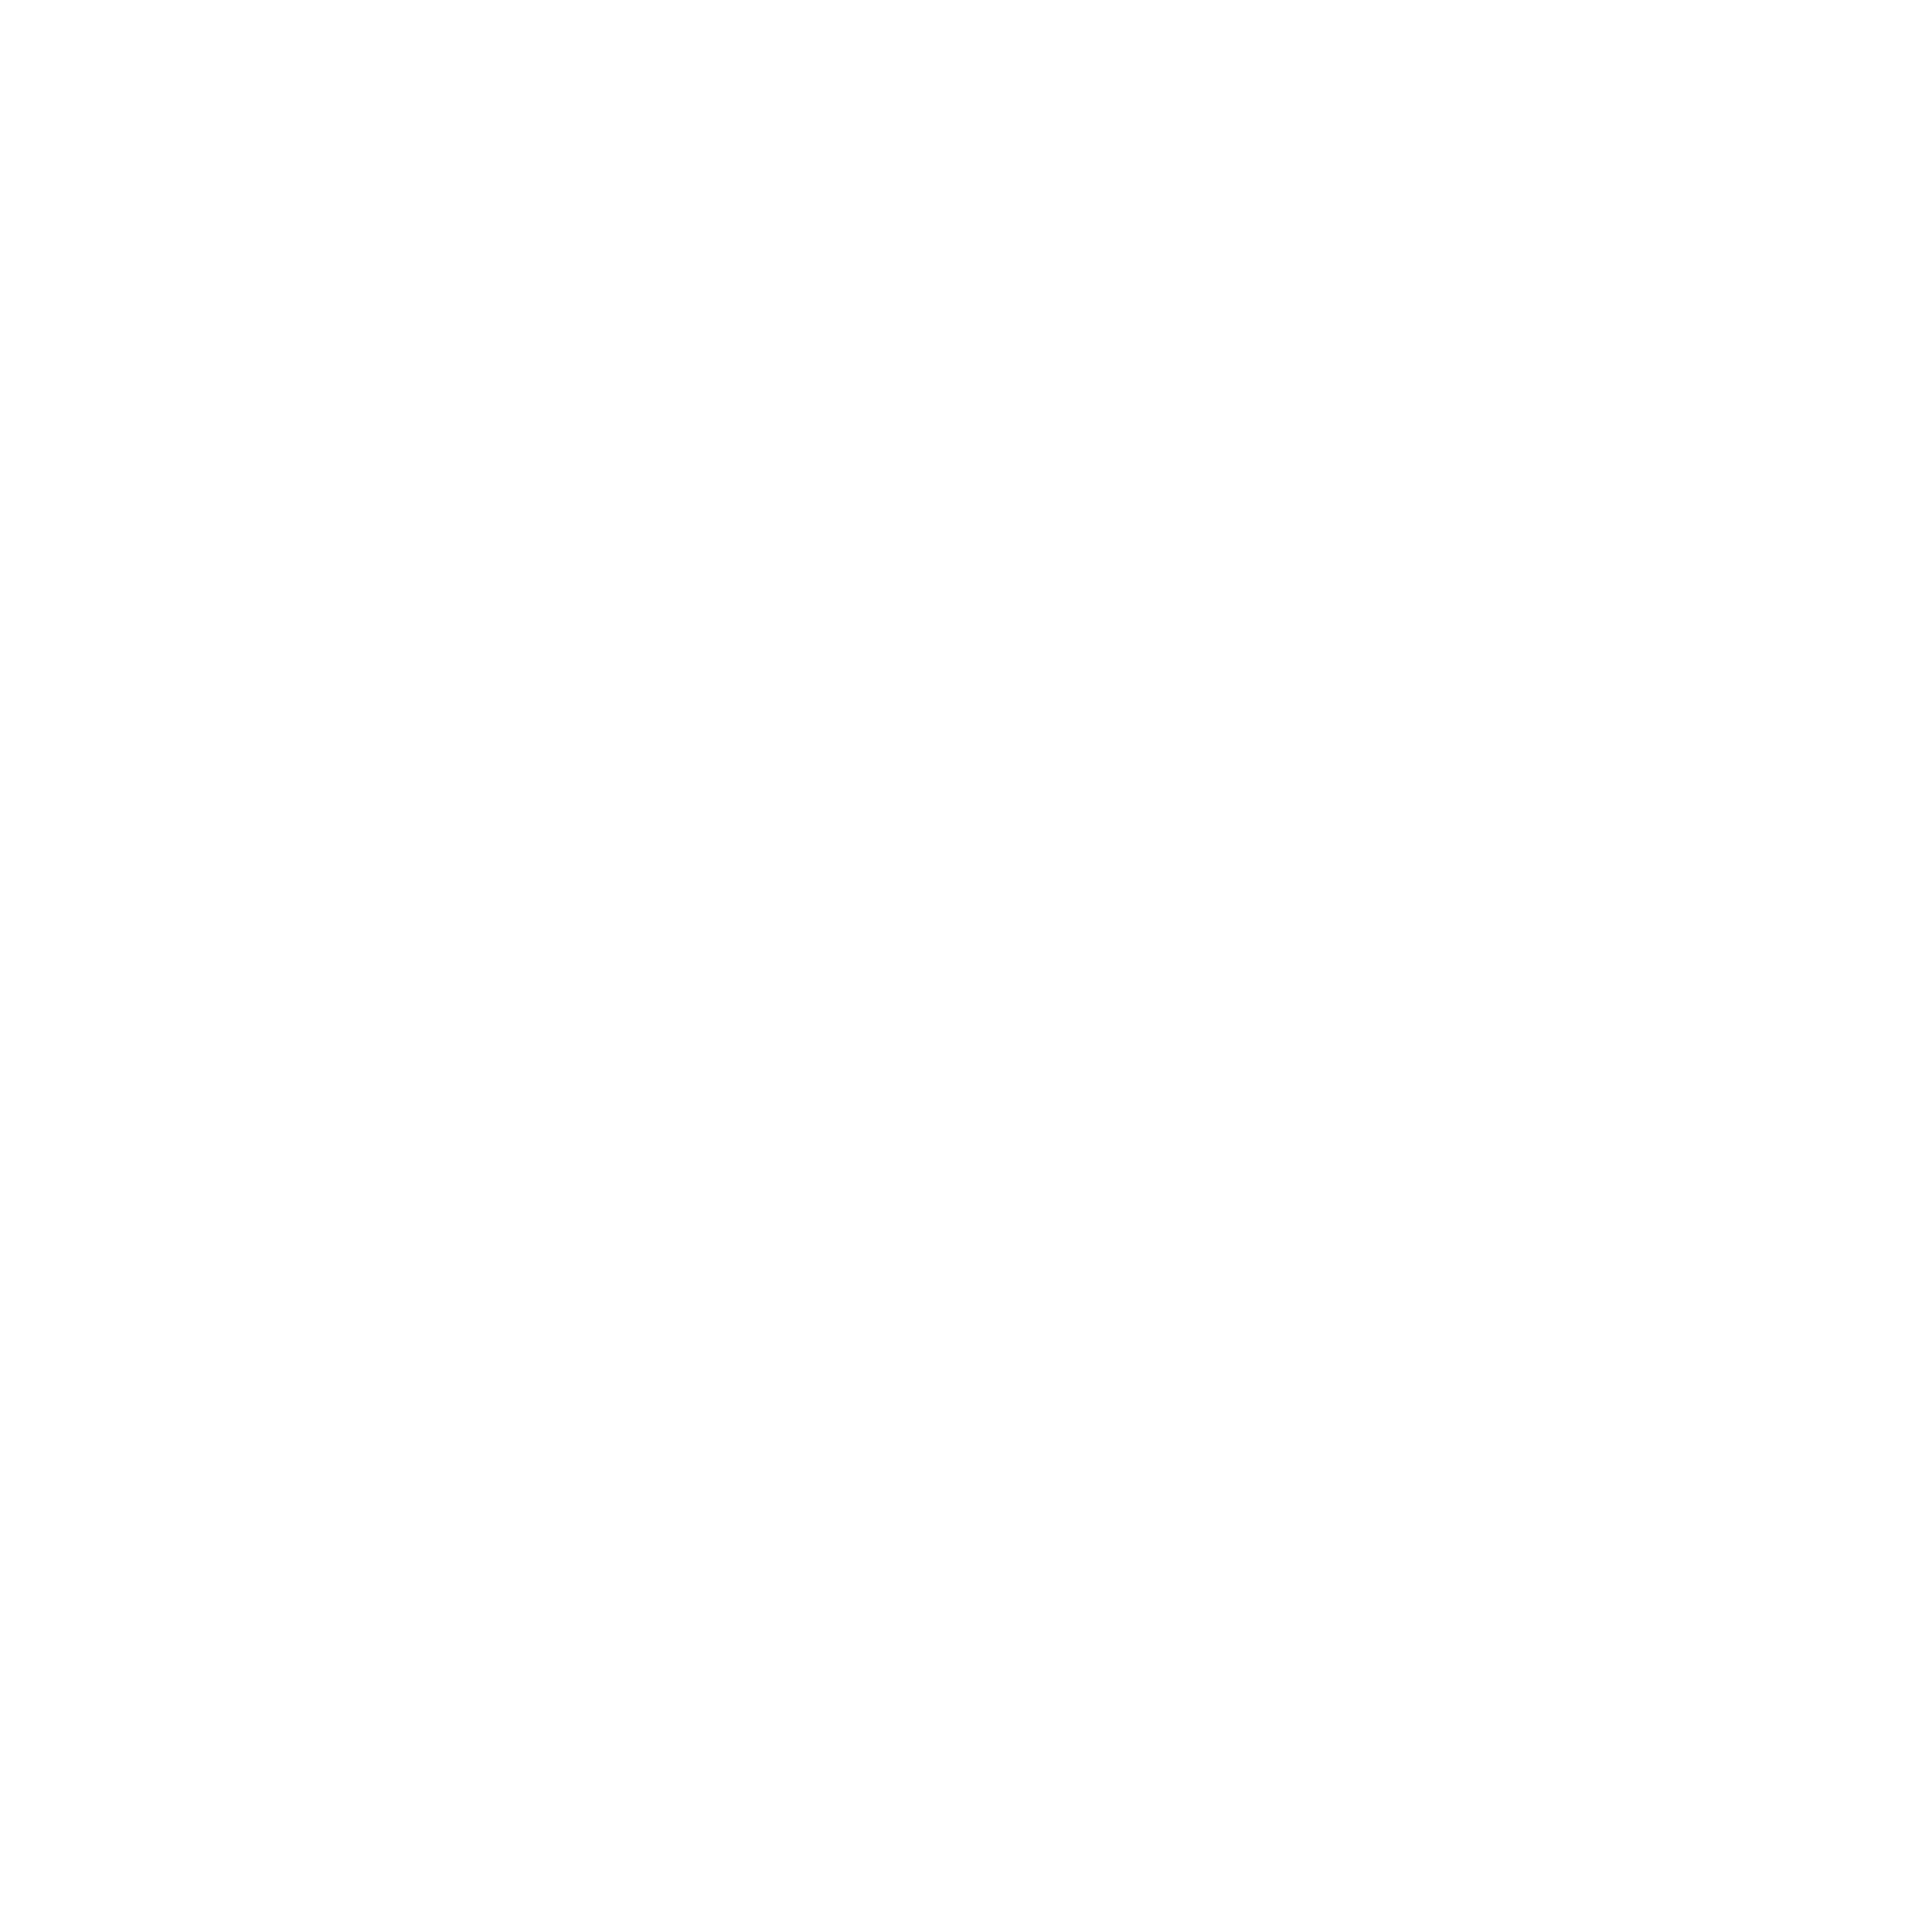 Target Pro Digital Marketing